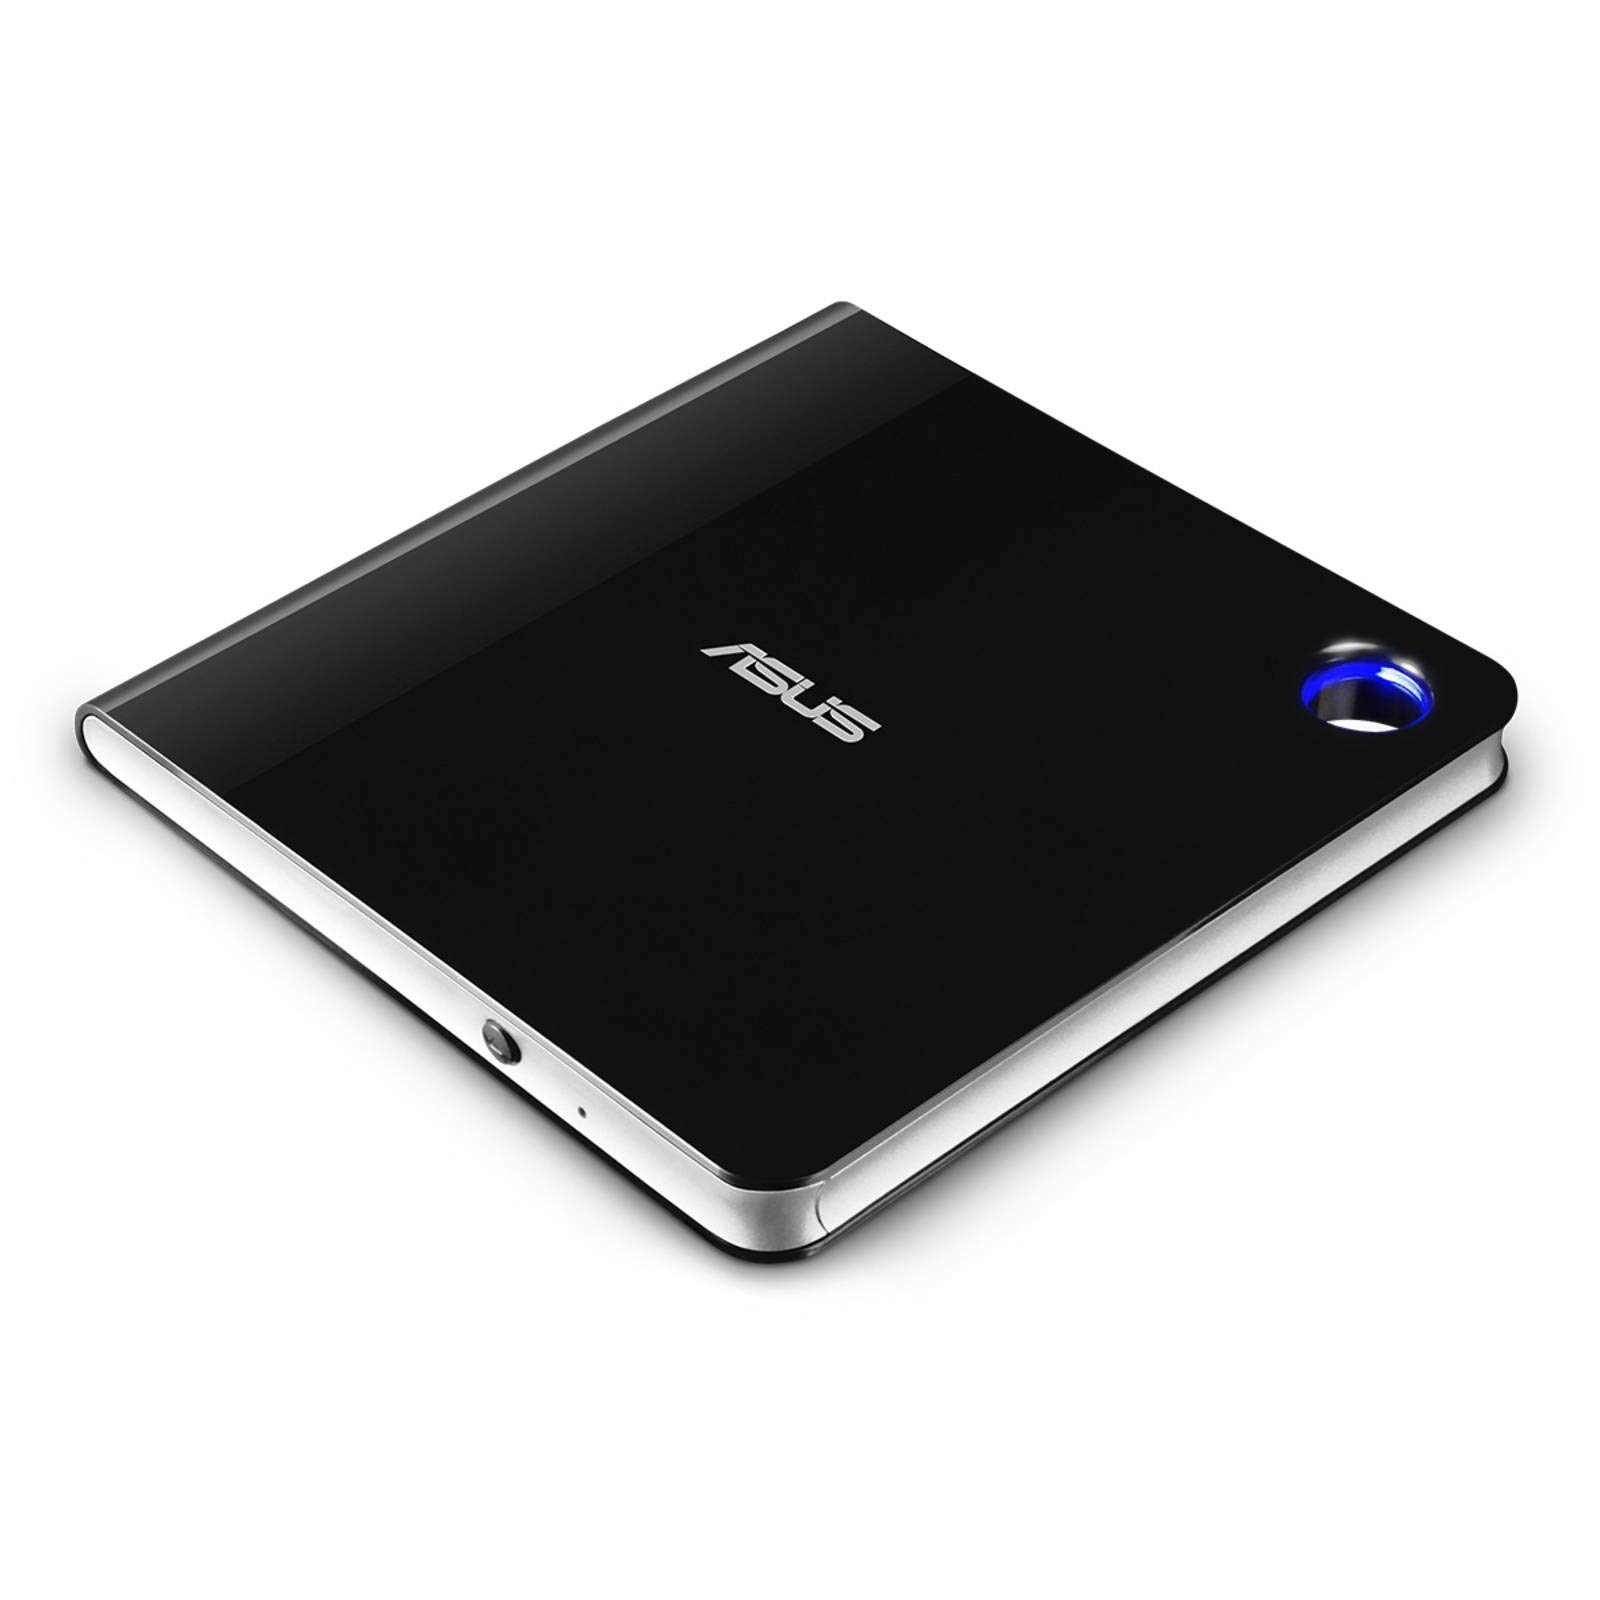 ASUS SBW-06D5H-U BDXL Extern Ultra Slim Blu-ray und MDisc Brenner (USB 3.1, USB-C, 2 Kabel) schwarz